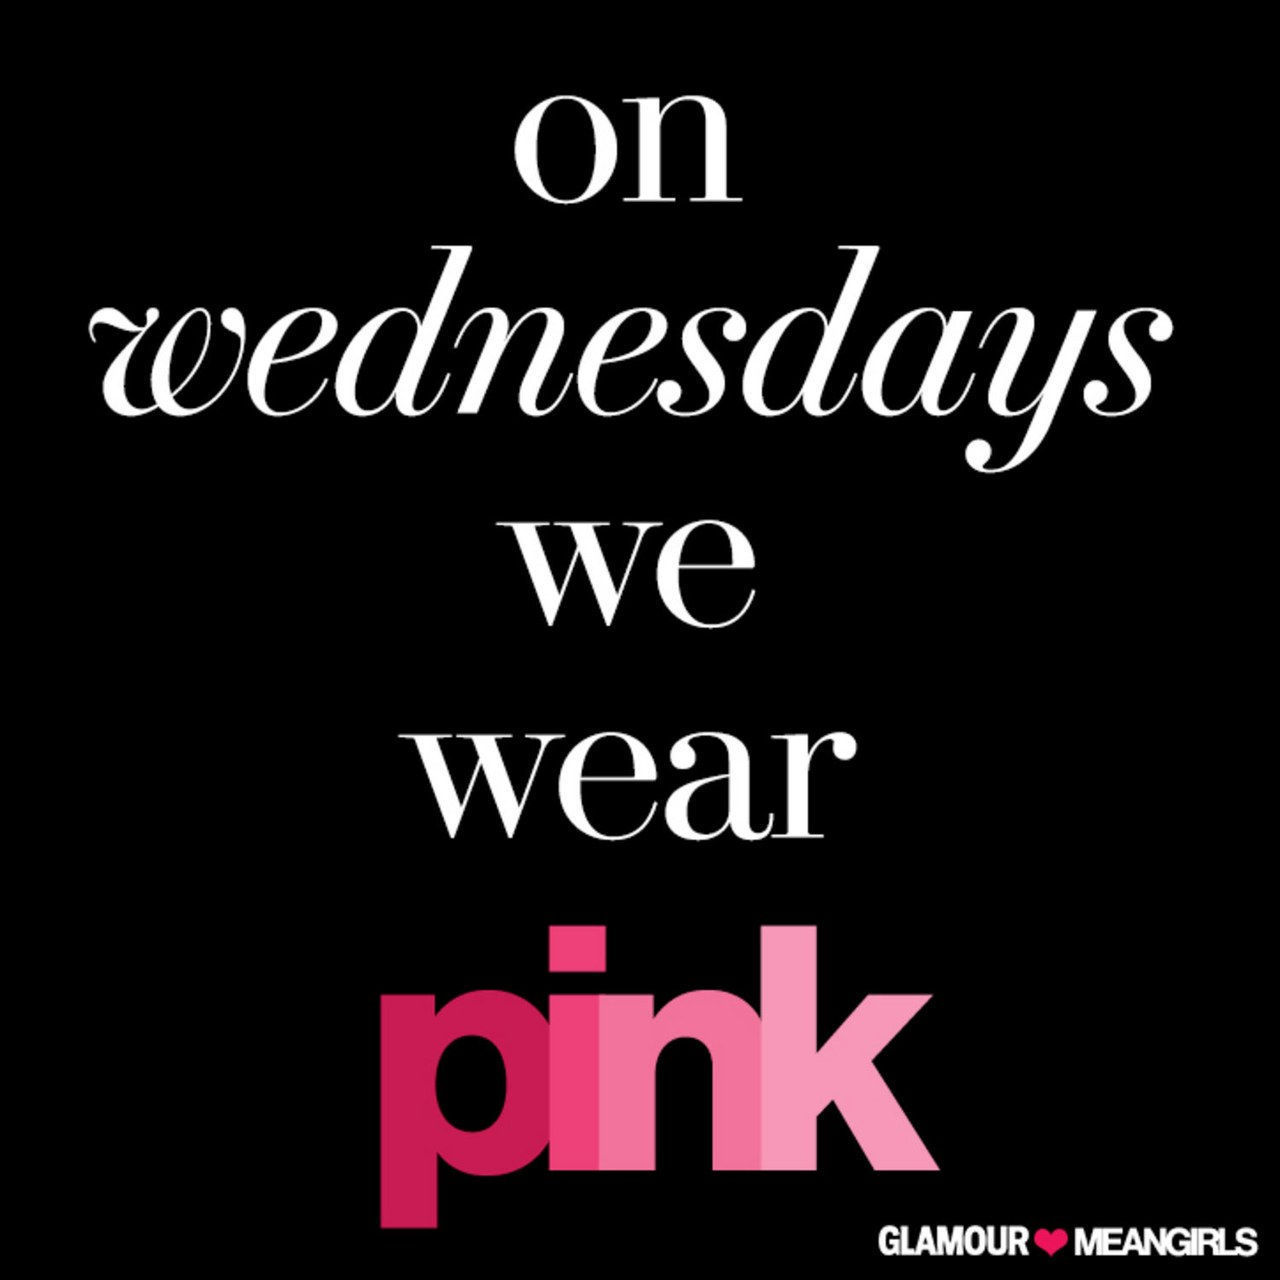 na wed we wear pink